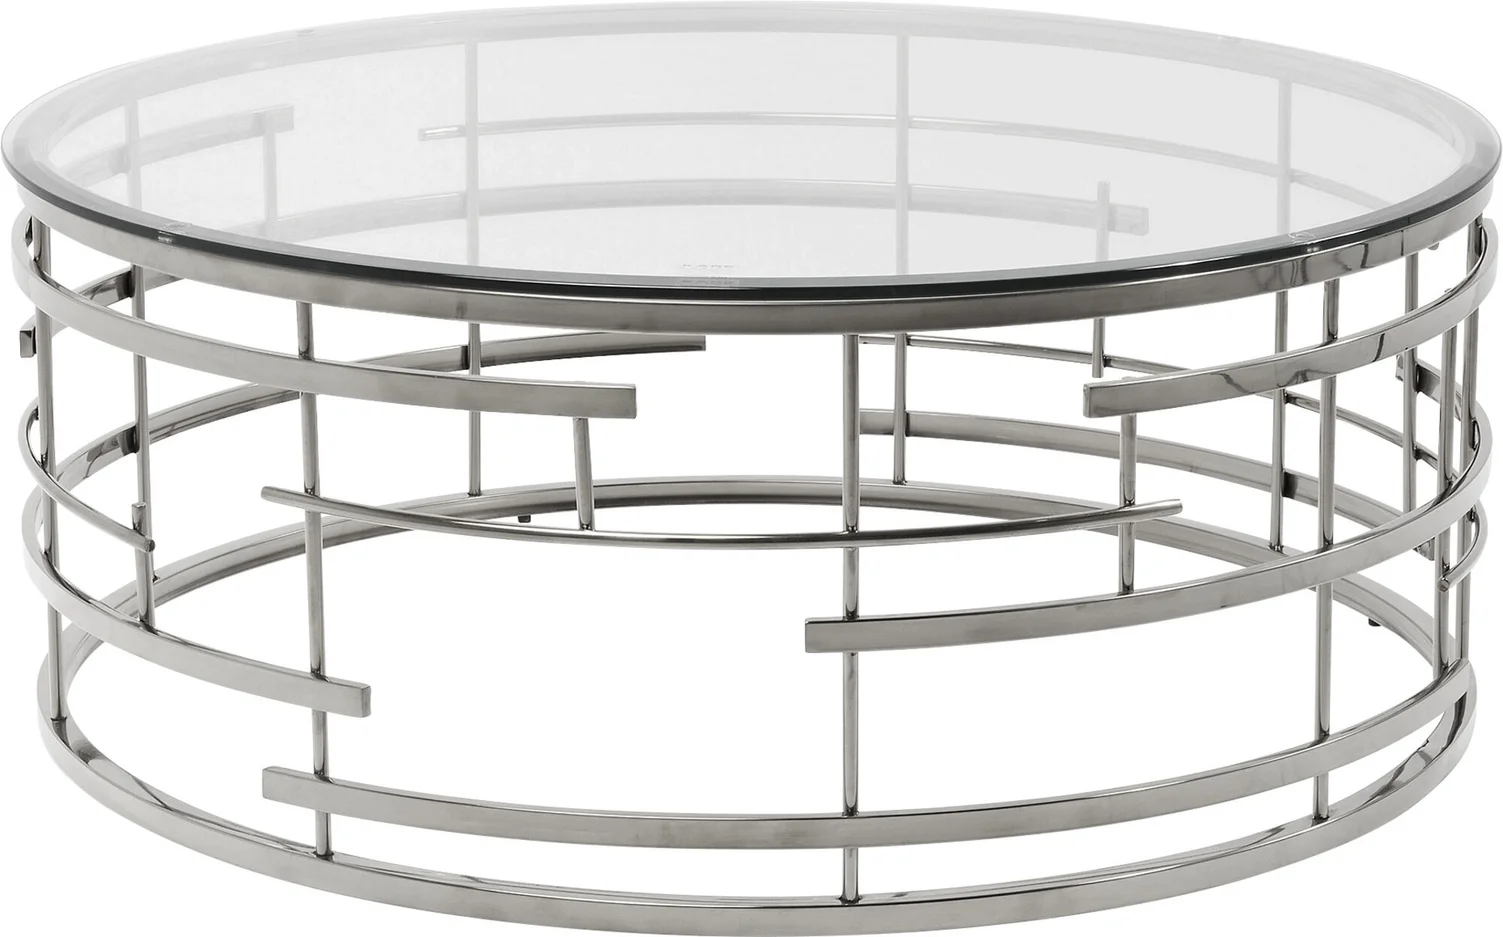 8: KARE DESIGN Jupiter sofabord - glas/sølv stål, rundt (Ø100)